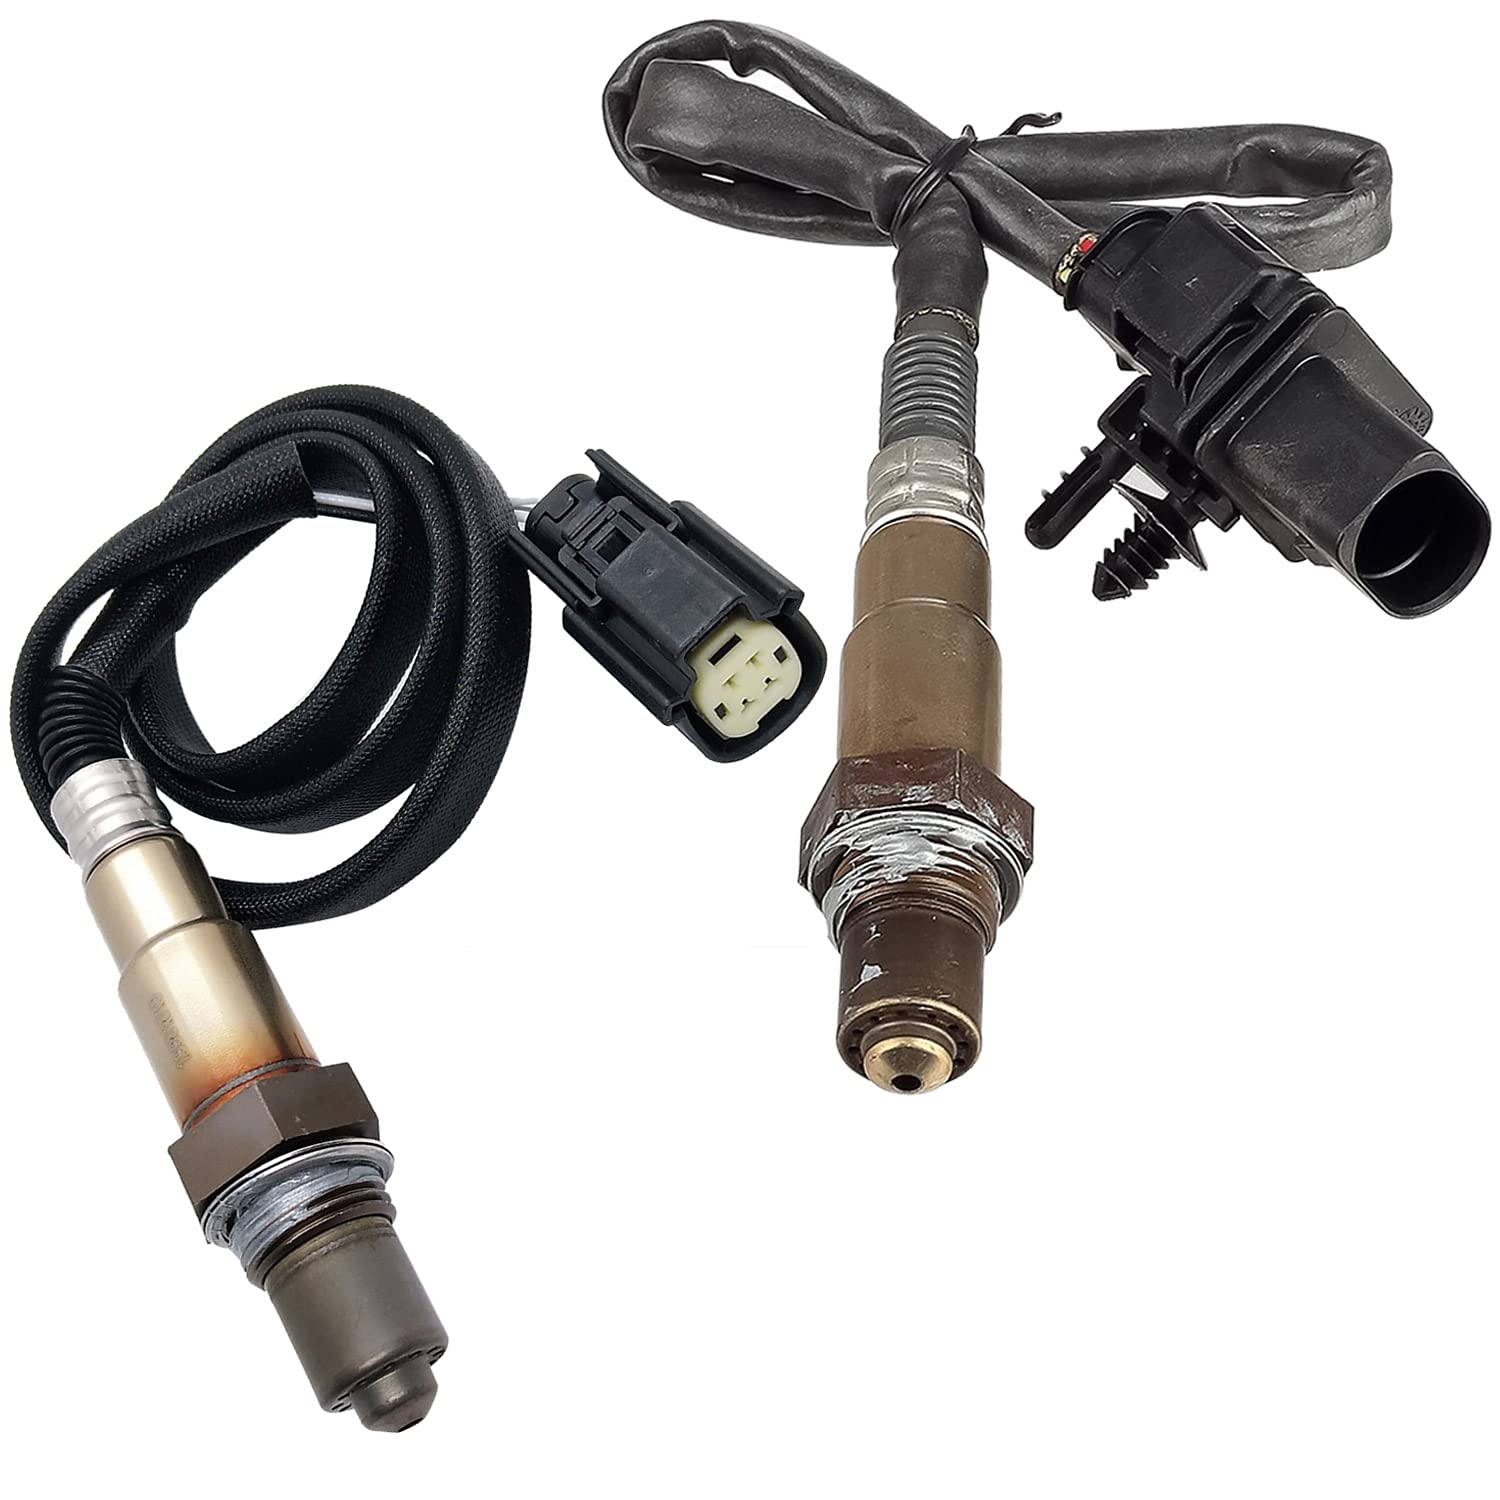 Maxfavor 2Pcs Oxygen Sensor Upstream and Downstream Replacement for Ford Focus Fusion 2012 2013 2014 2015 1.6L 2.0L,for 2015 Lincoln MKC 2.3L O2 Sensor 234-5113 234-4575 02 Sensor